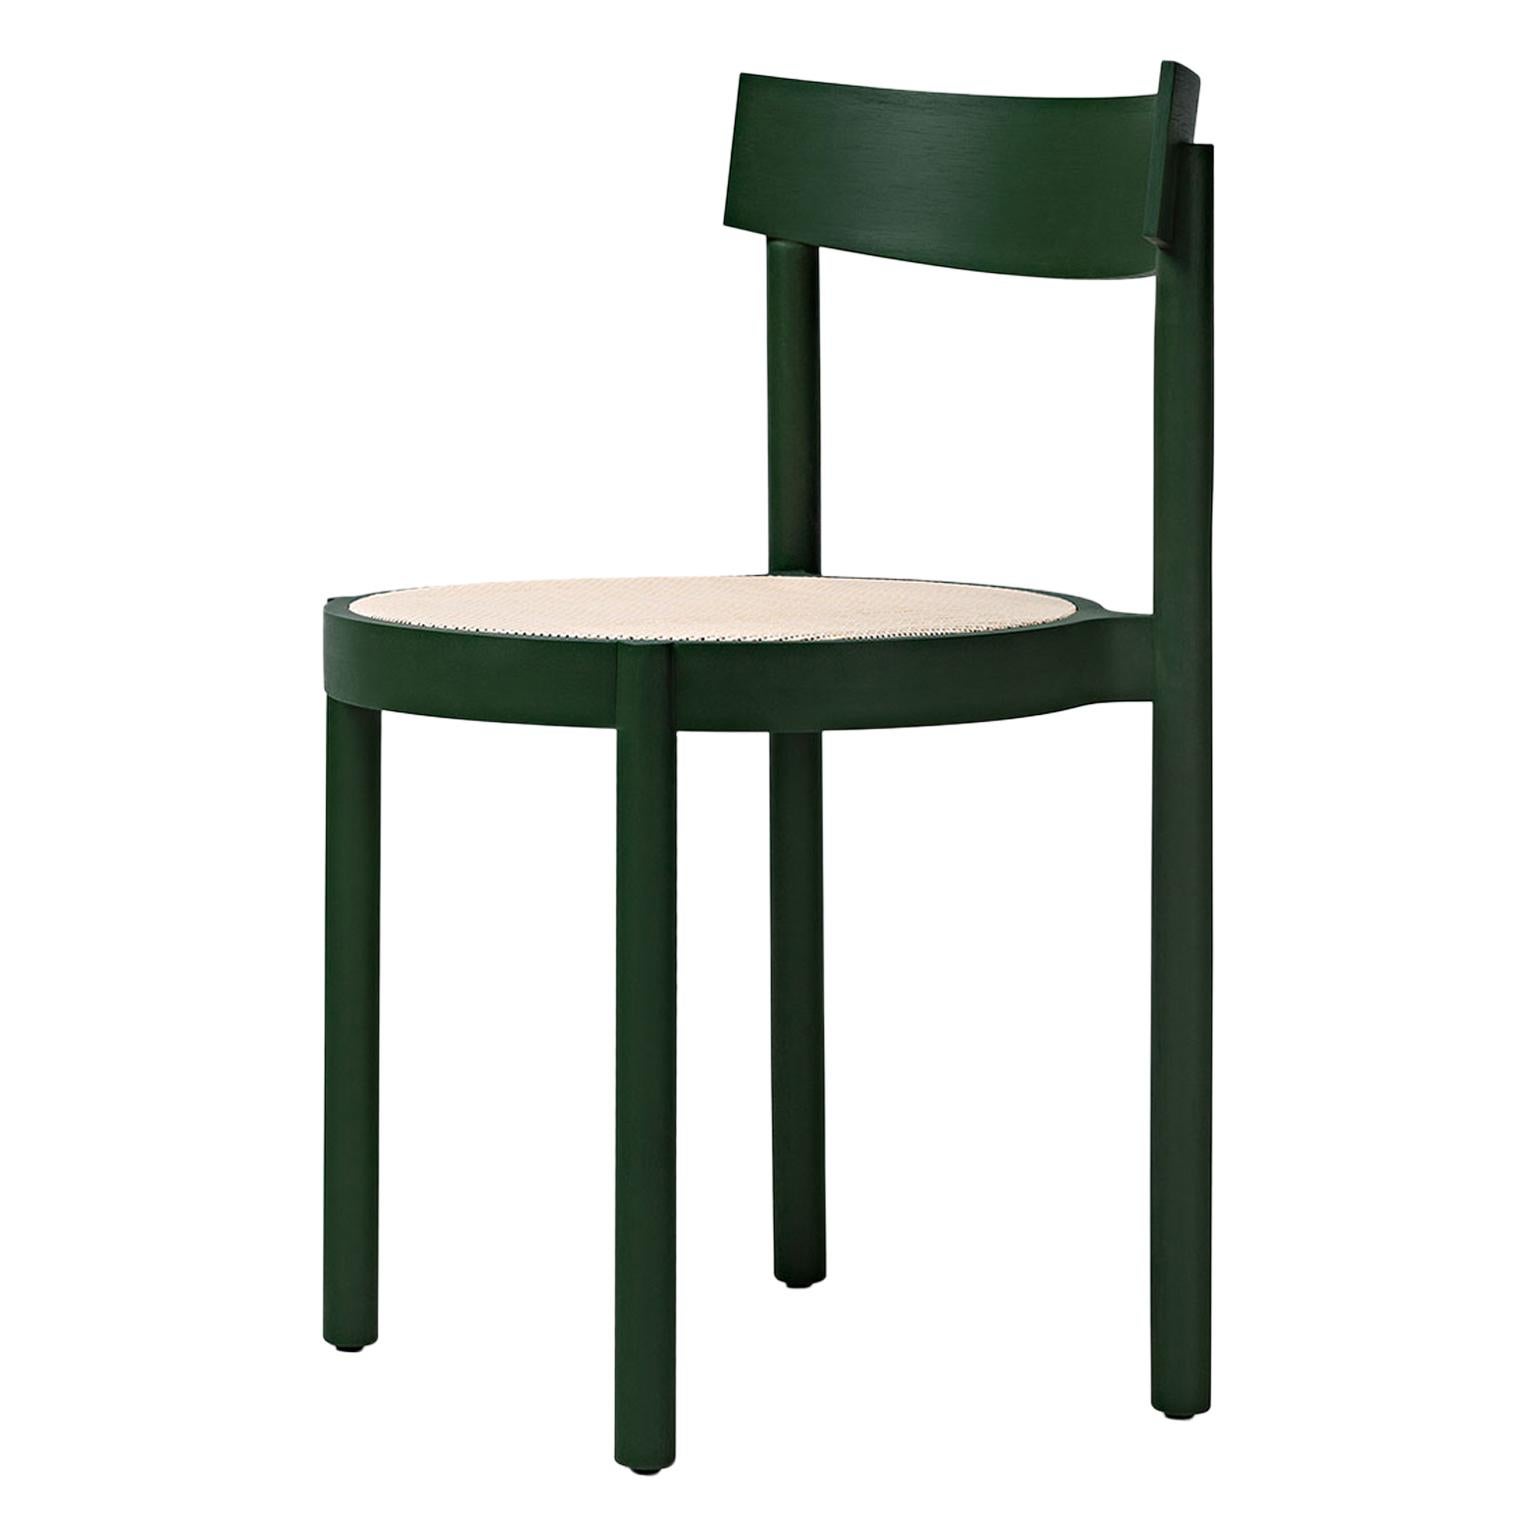 Gravatá Chair in Green by Wentz, Brazilian Contemporary Design